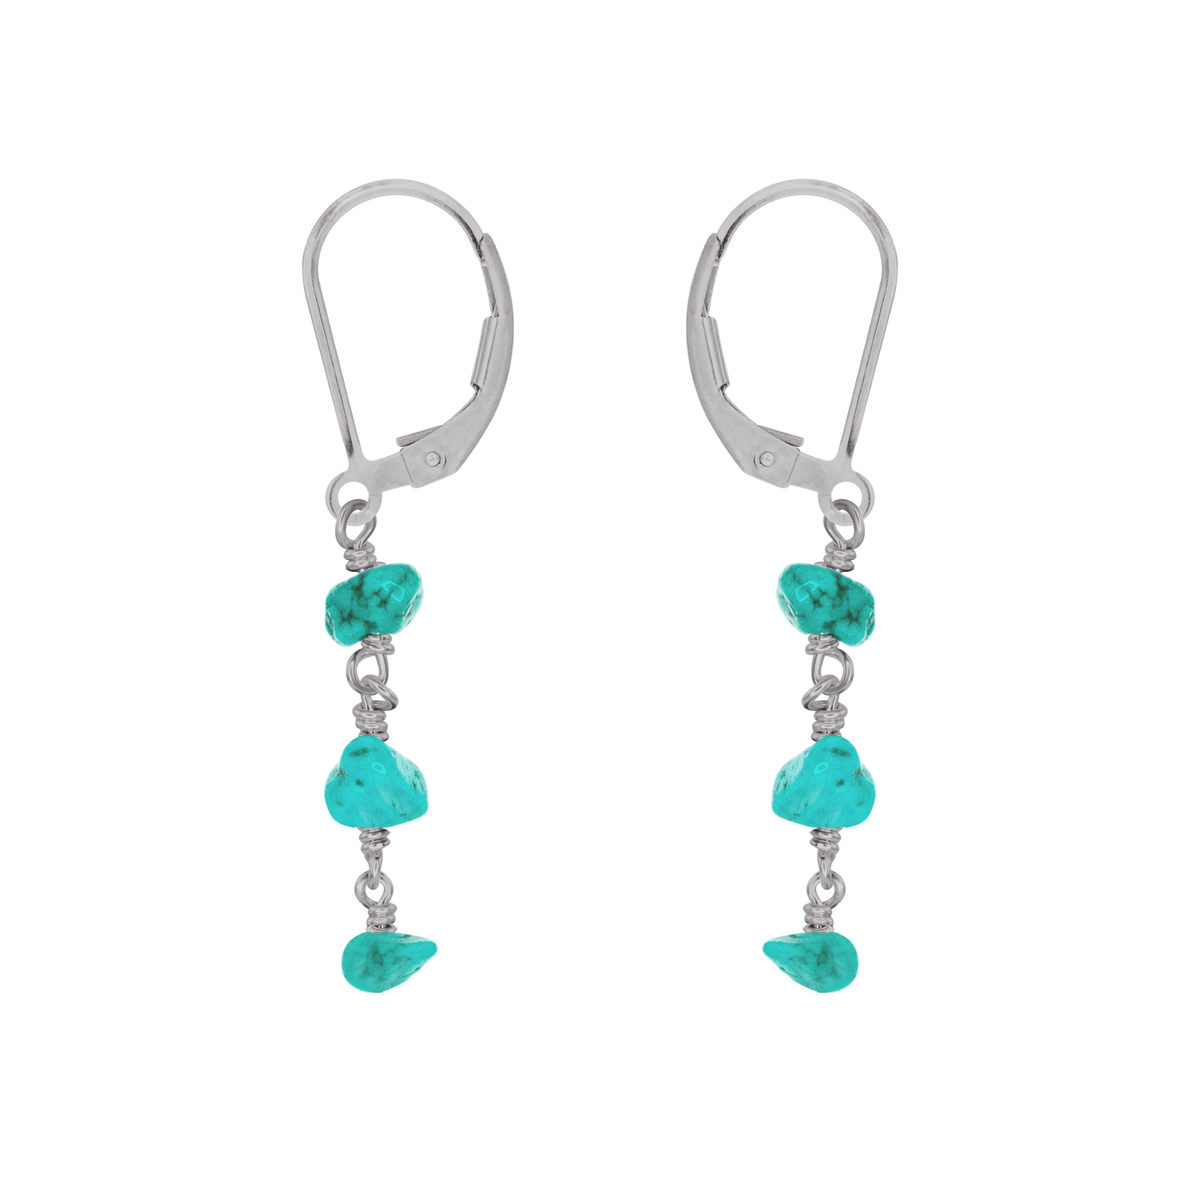 Turquoise Crystal Beaded Chain Dangle Leverback Earrings - Turquoise Crystal Beaded Chain Dangle Leverback Earrings - Stainless Steel - Luna Tide Handmade Crystal Jewellery